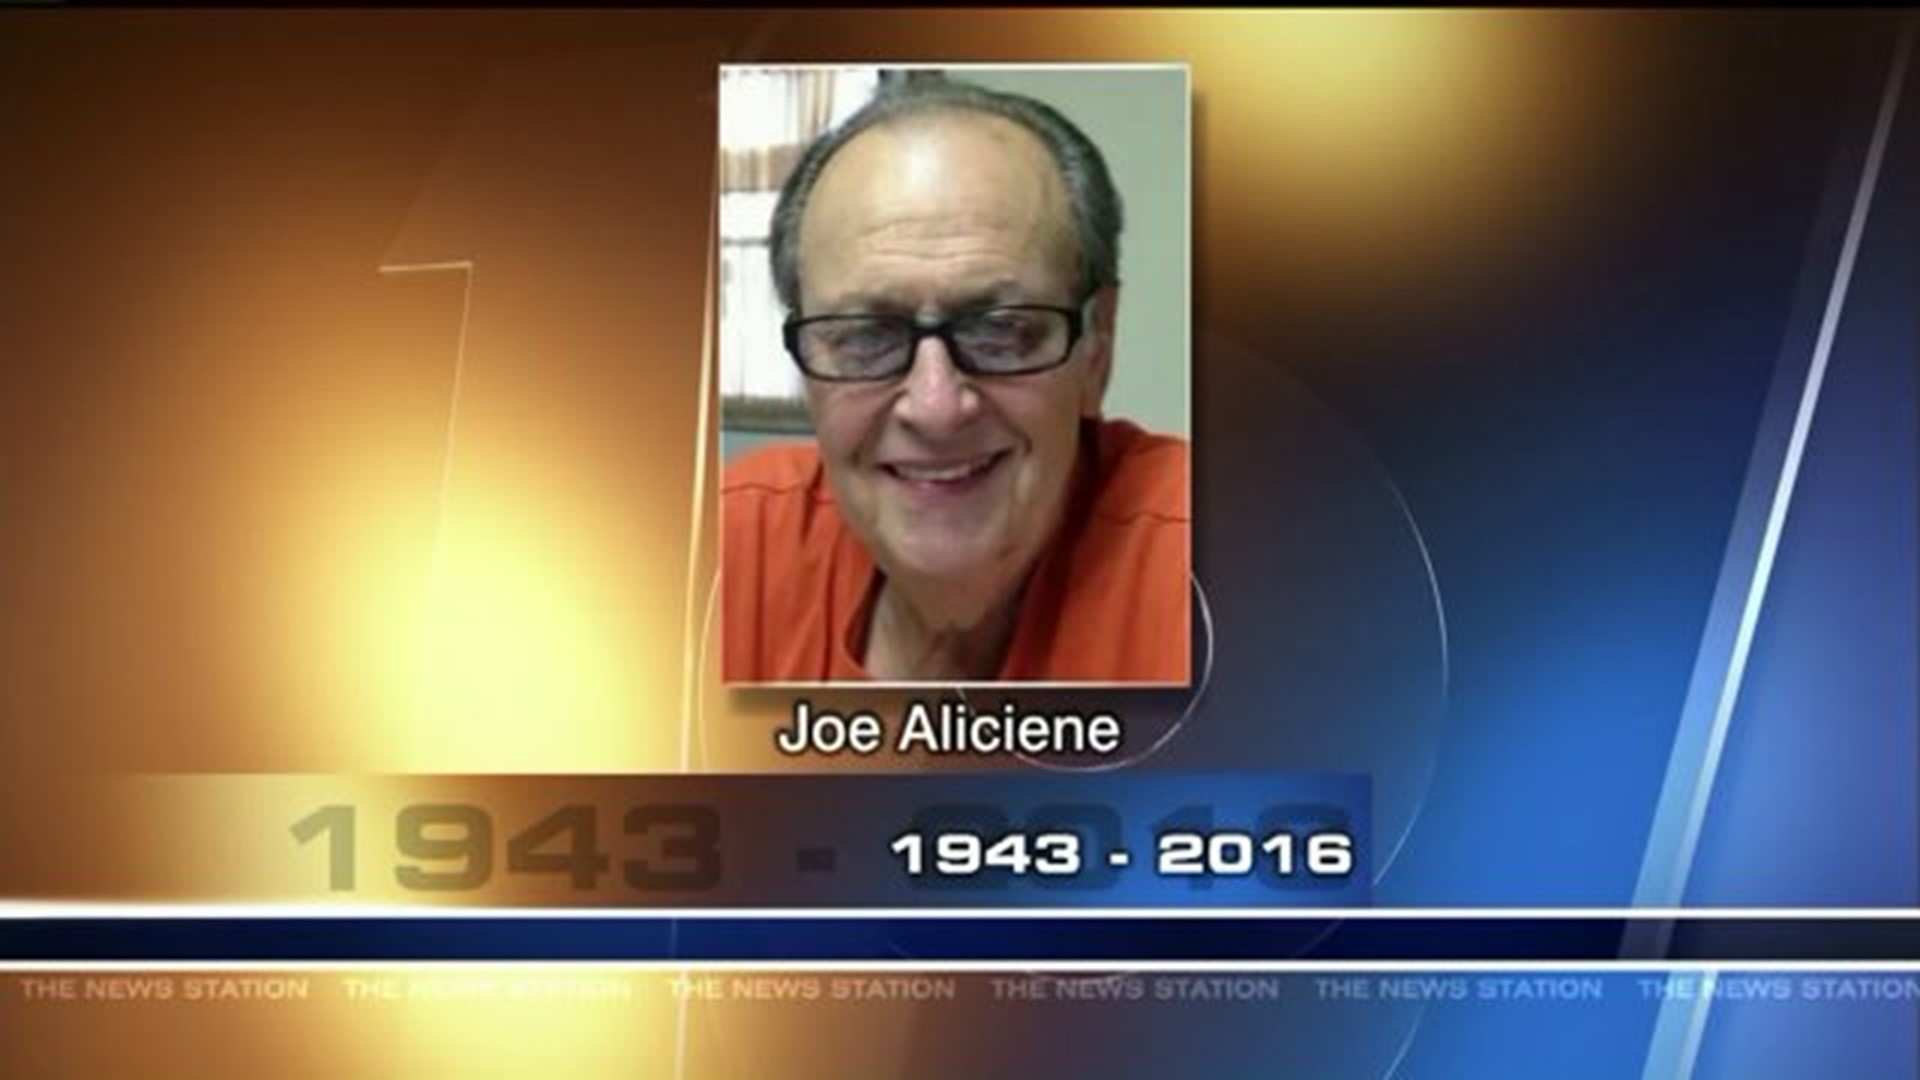 Man Behind Northeast Fair, Joe Aliciene, Dies Monday